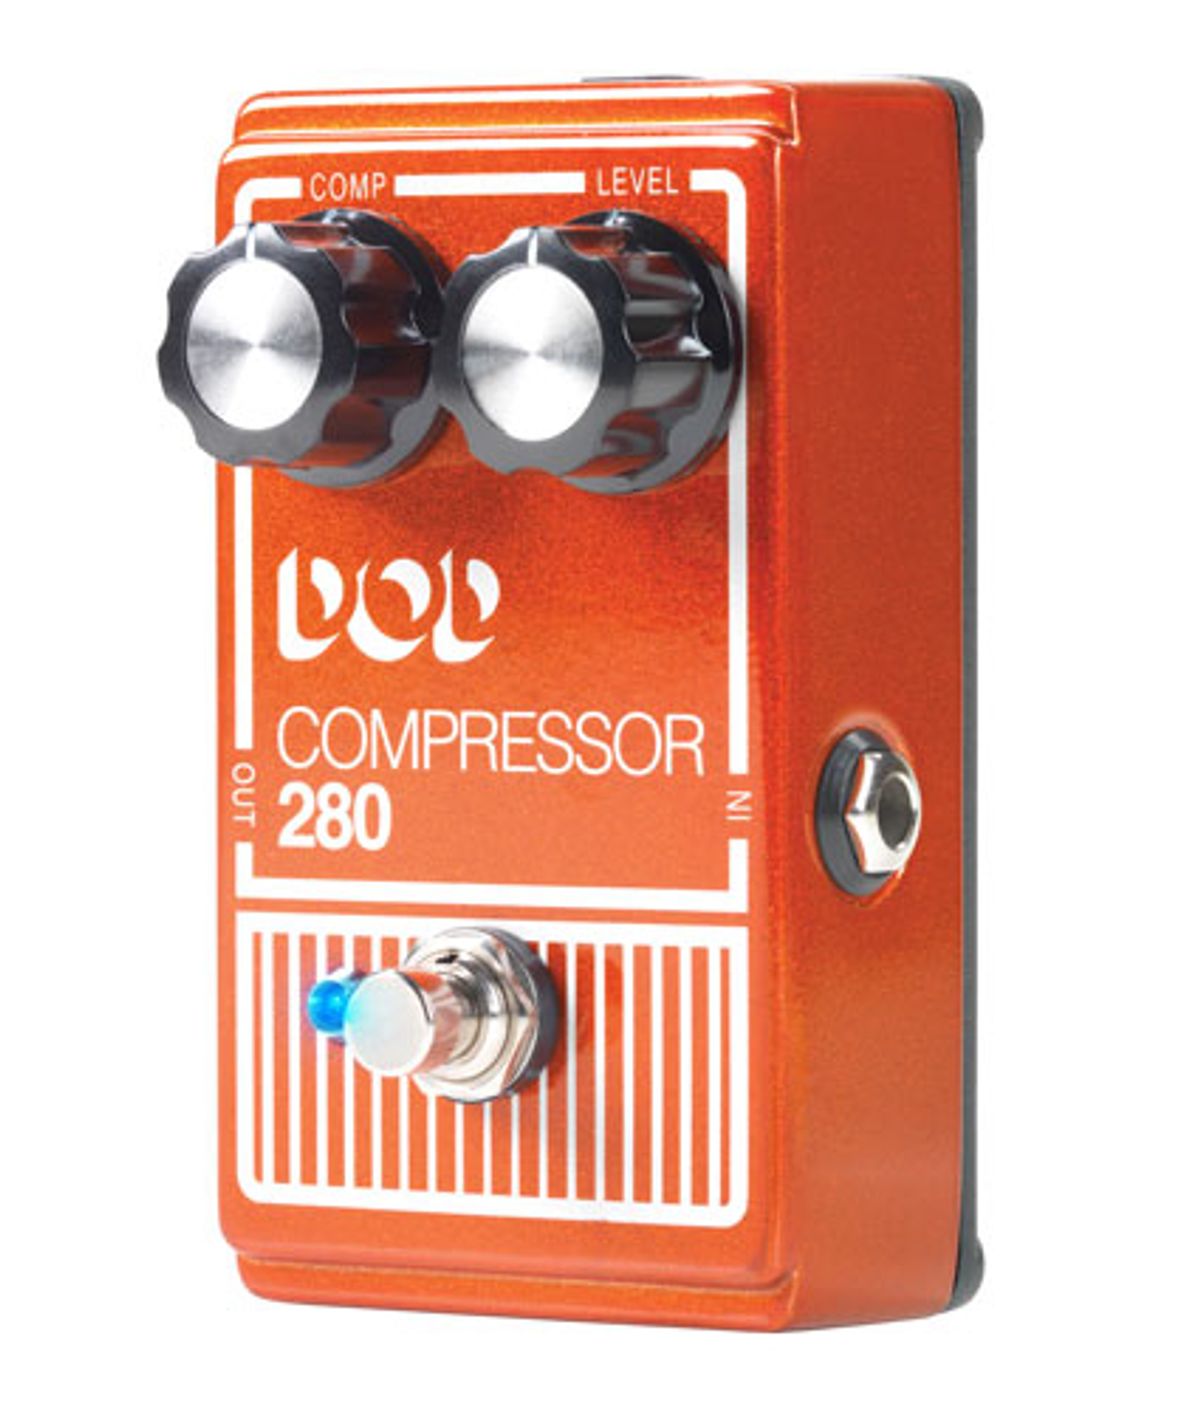 DigiTech Reissues the DOD Compressor 280